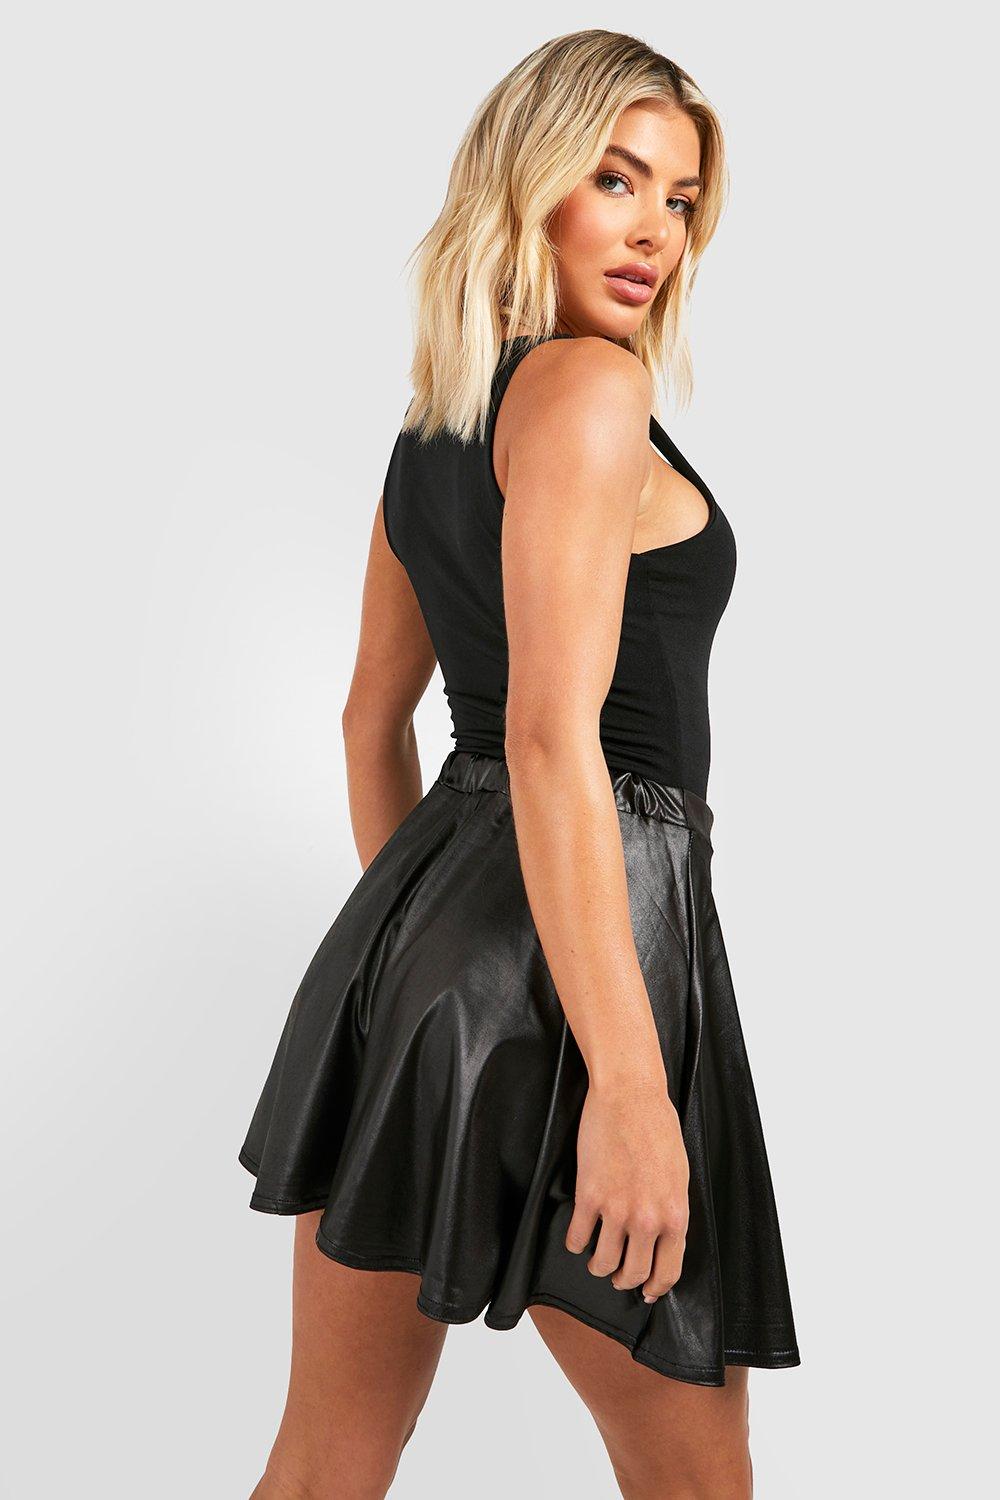 https://media.boohoo.com/i/boohoo/dzz00834_black_xl_1/female-black-high-waisted-faux-leather-skater-skirt